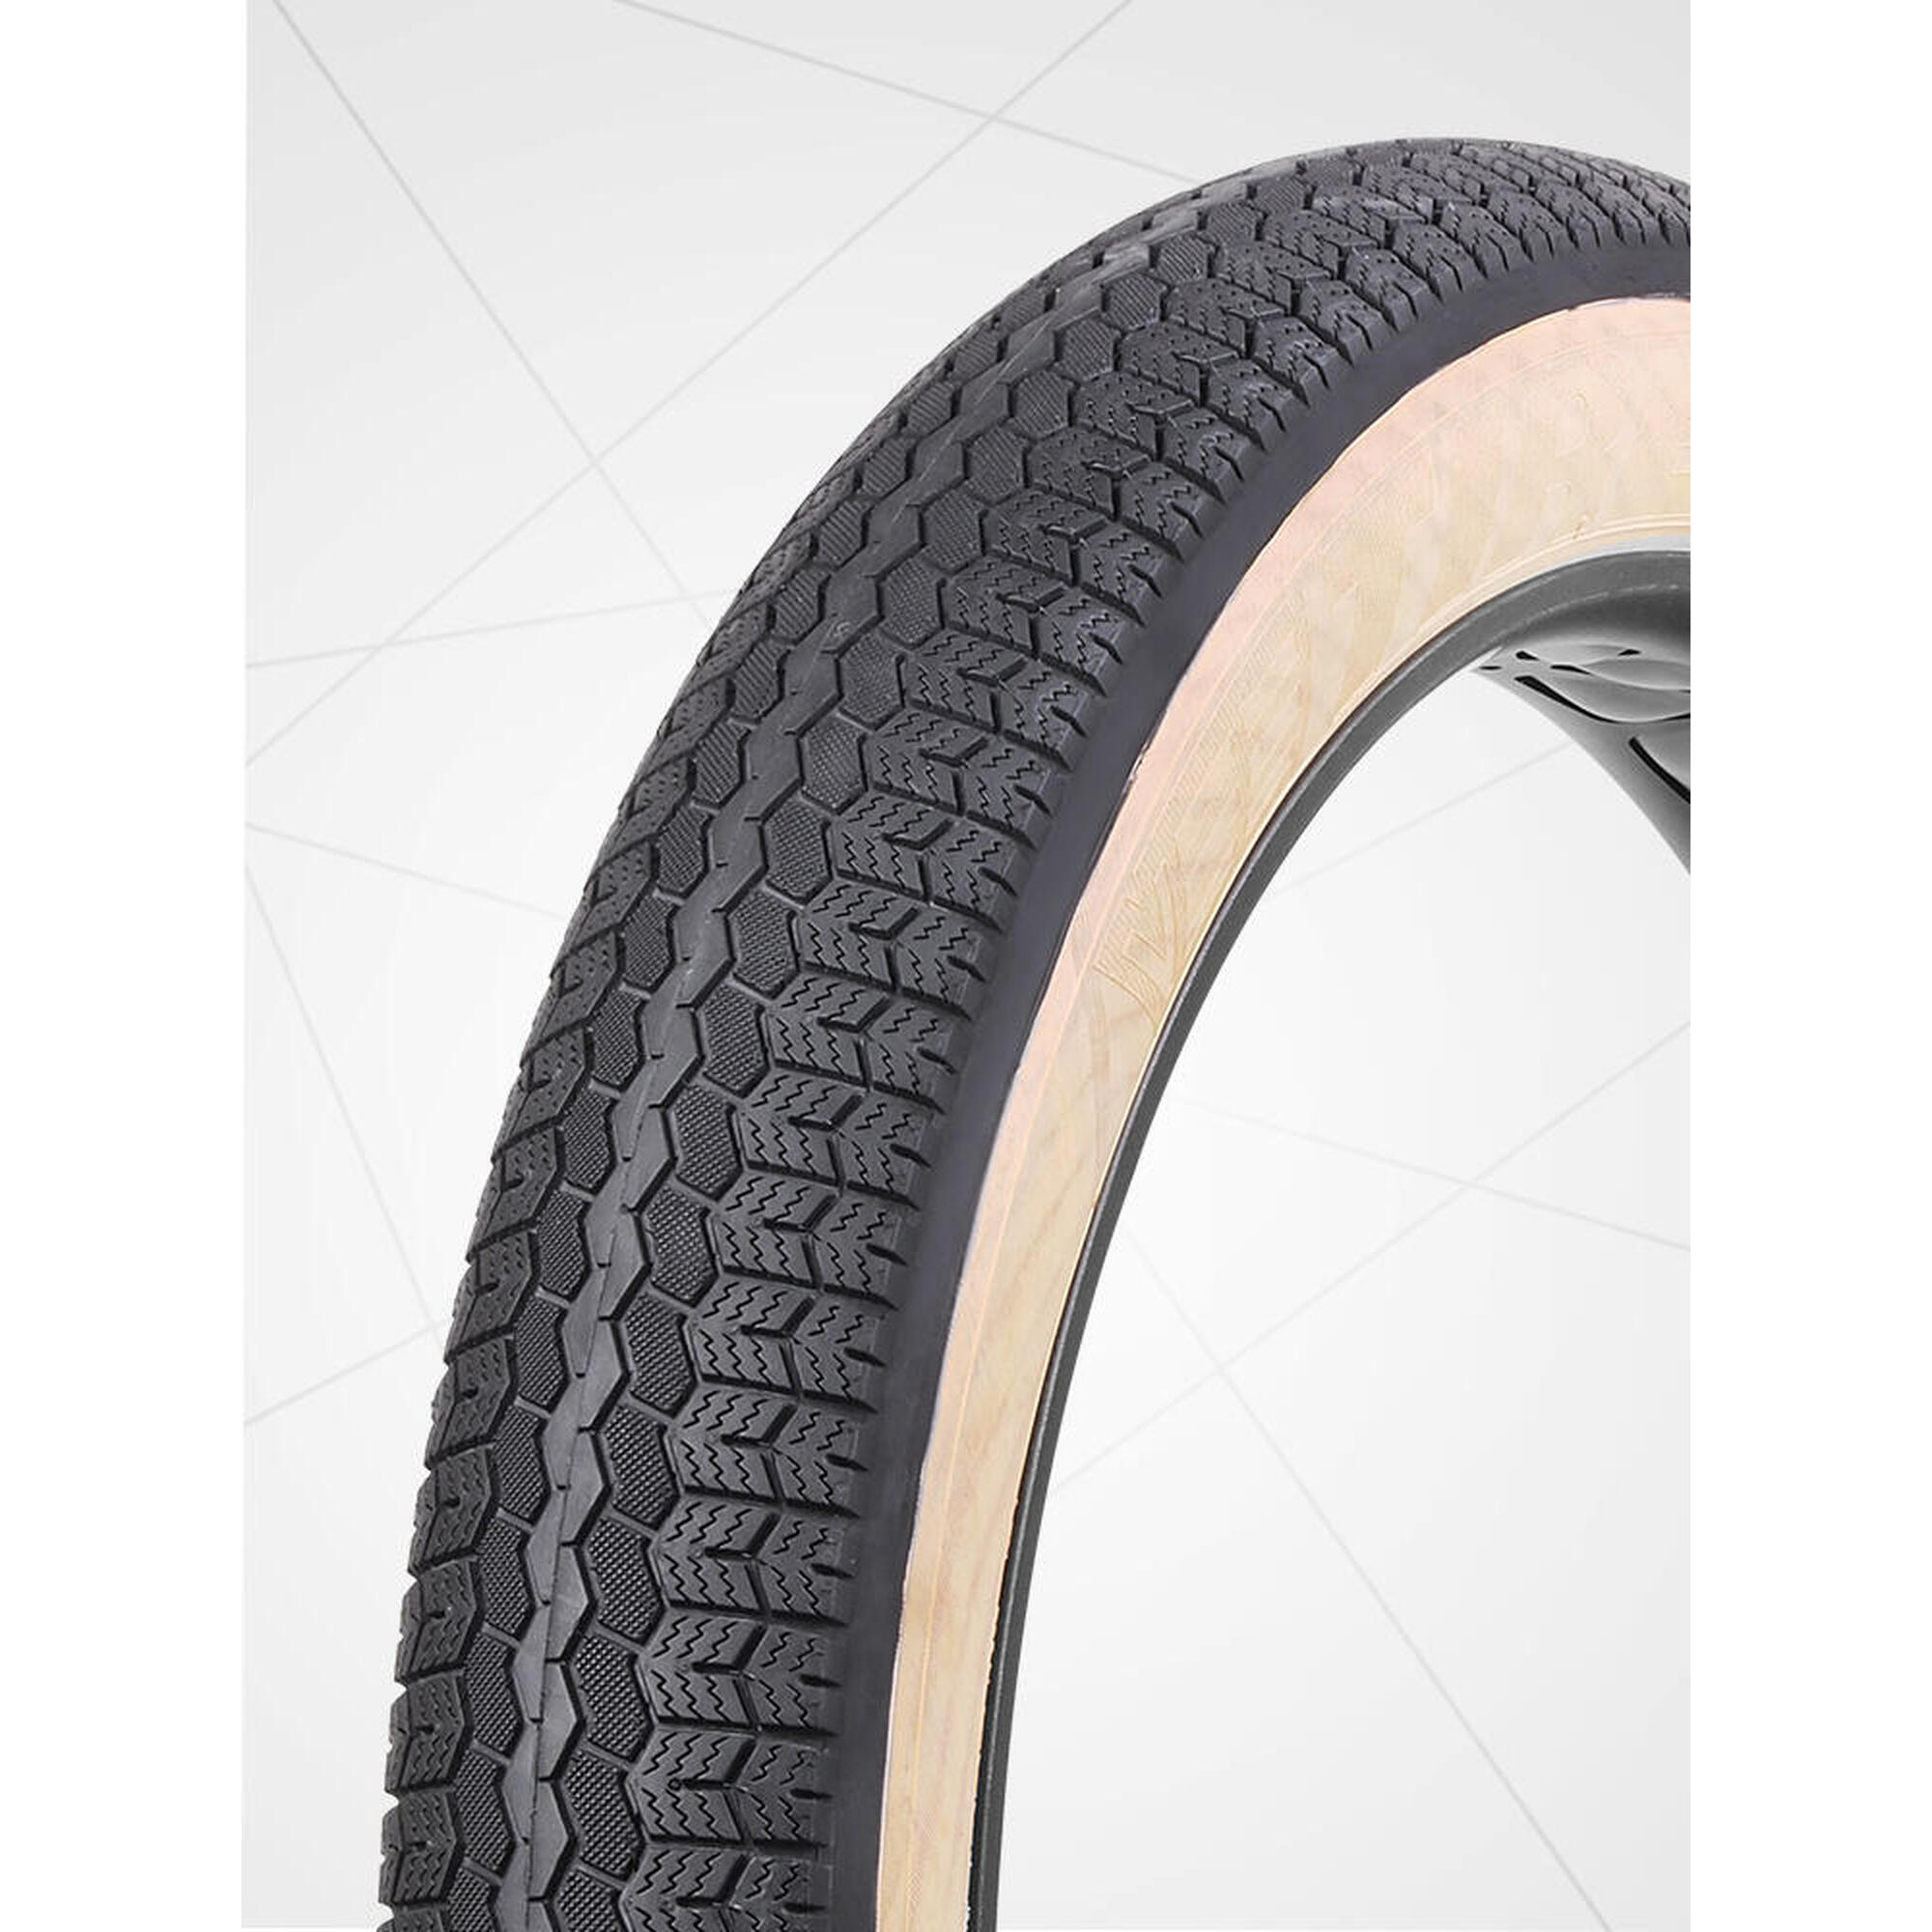 VEE Tire Co Pneus Fatbike CHICANE 26 X 3.5 MPC pneu en fil de fer Skinwall